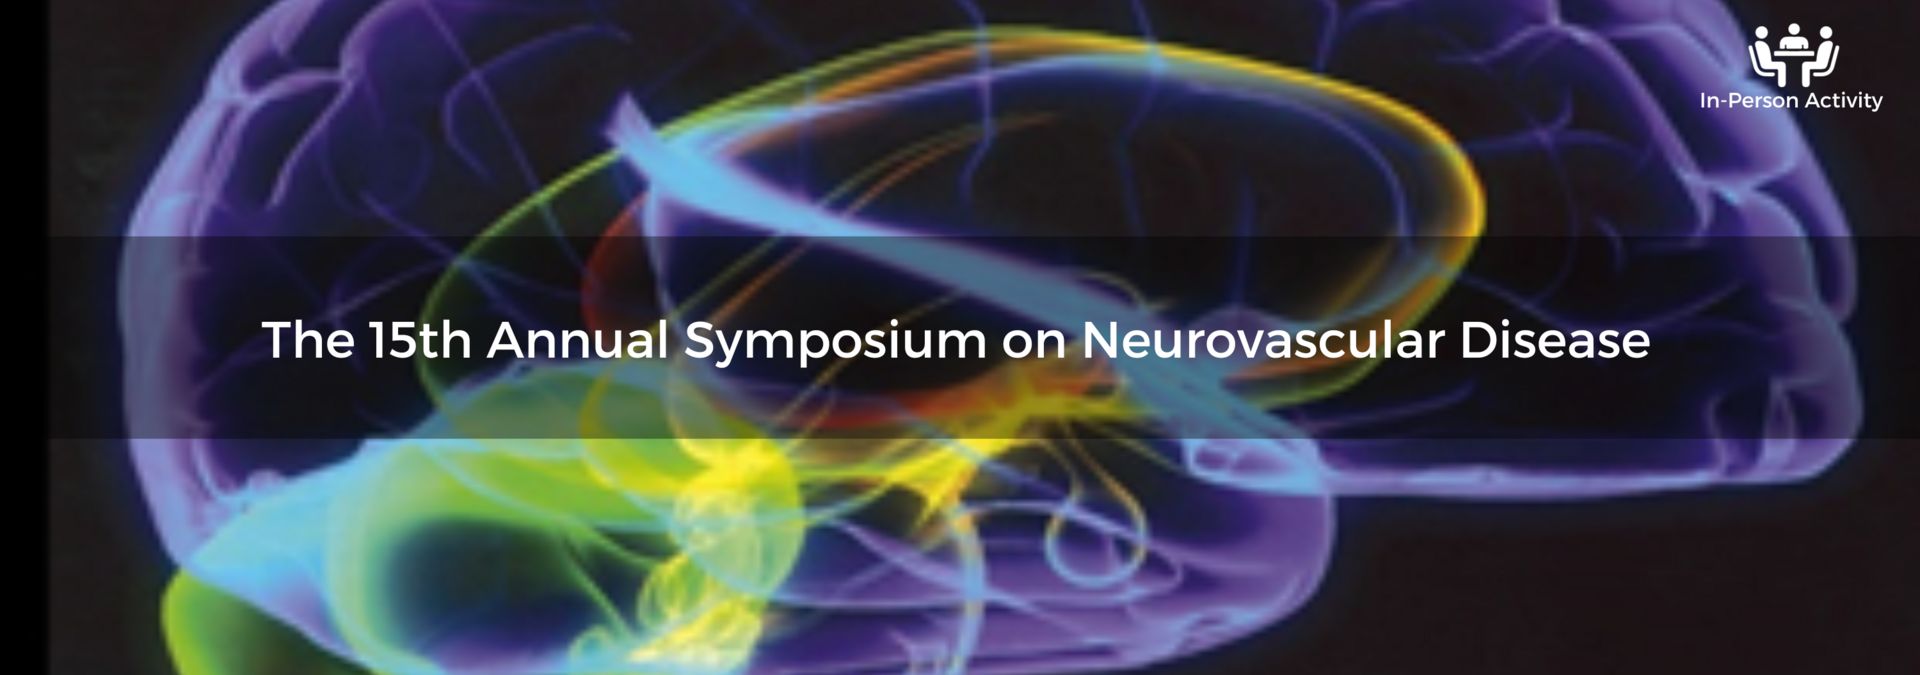 The 15th Annual Symposium on Neurovascular Disease